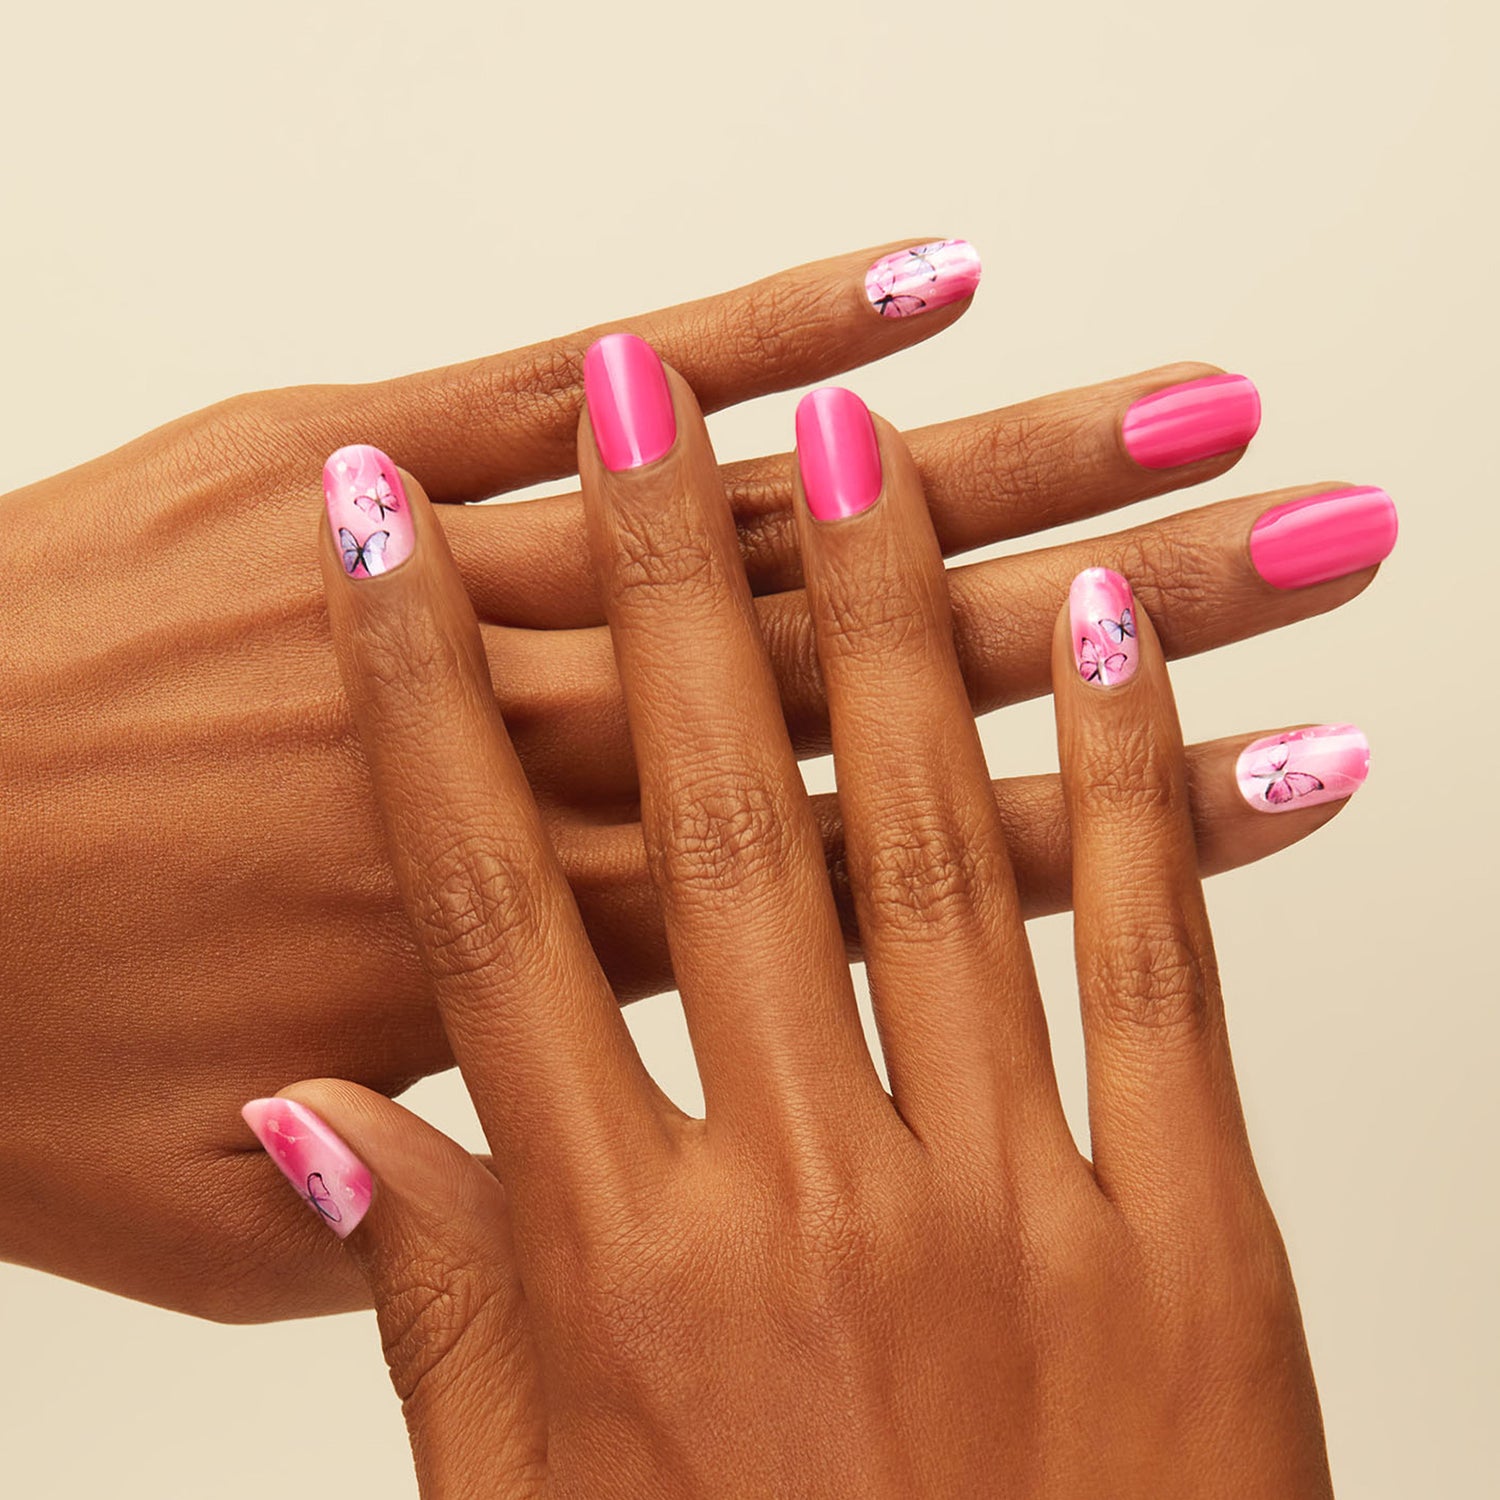 GULGLOW99 Long & Lasting Light Mergenta Glossy Finish nail polish Hot pink  - Price in India, Buy GULGLOW99 Long & Lasting Light Mergenta Glossy Finish nail  polish Hot pink Online In India,